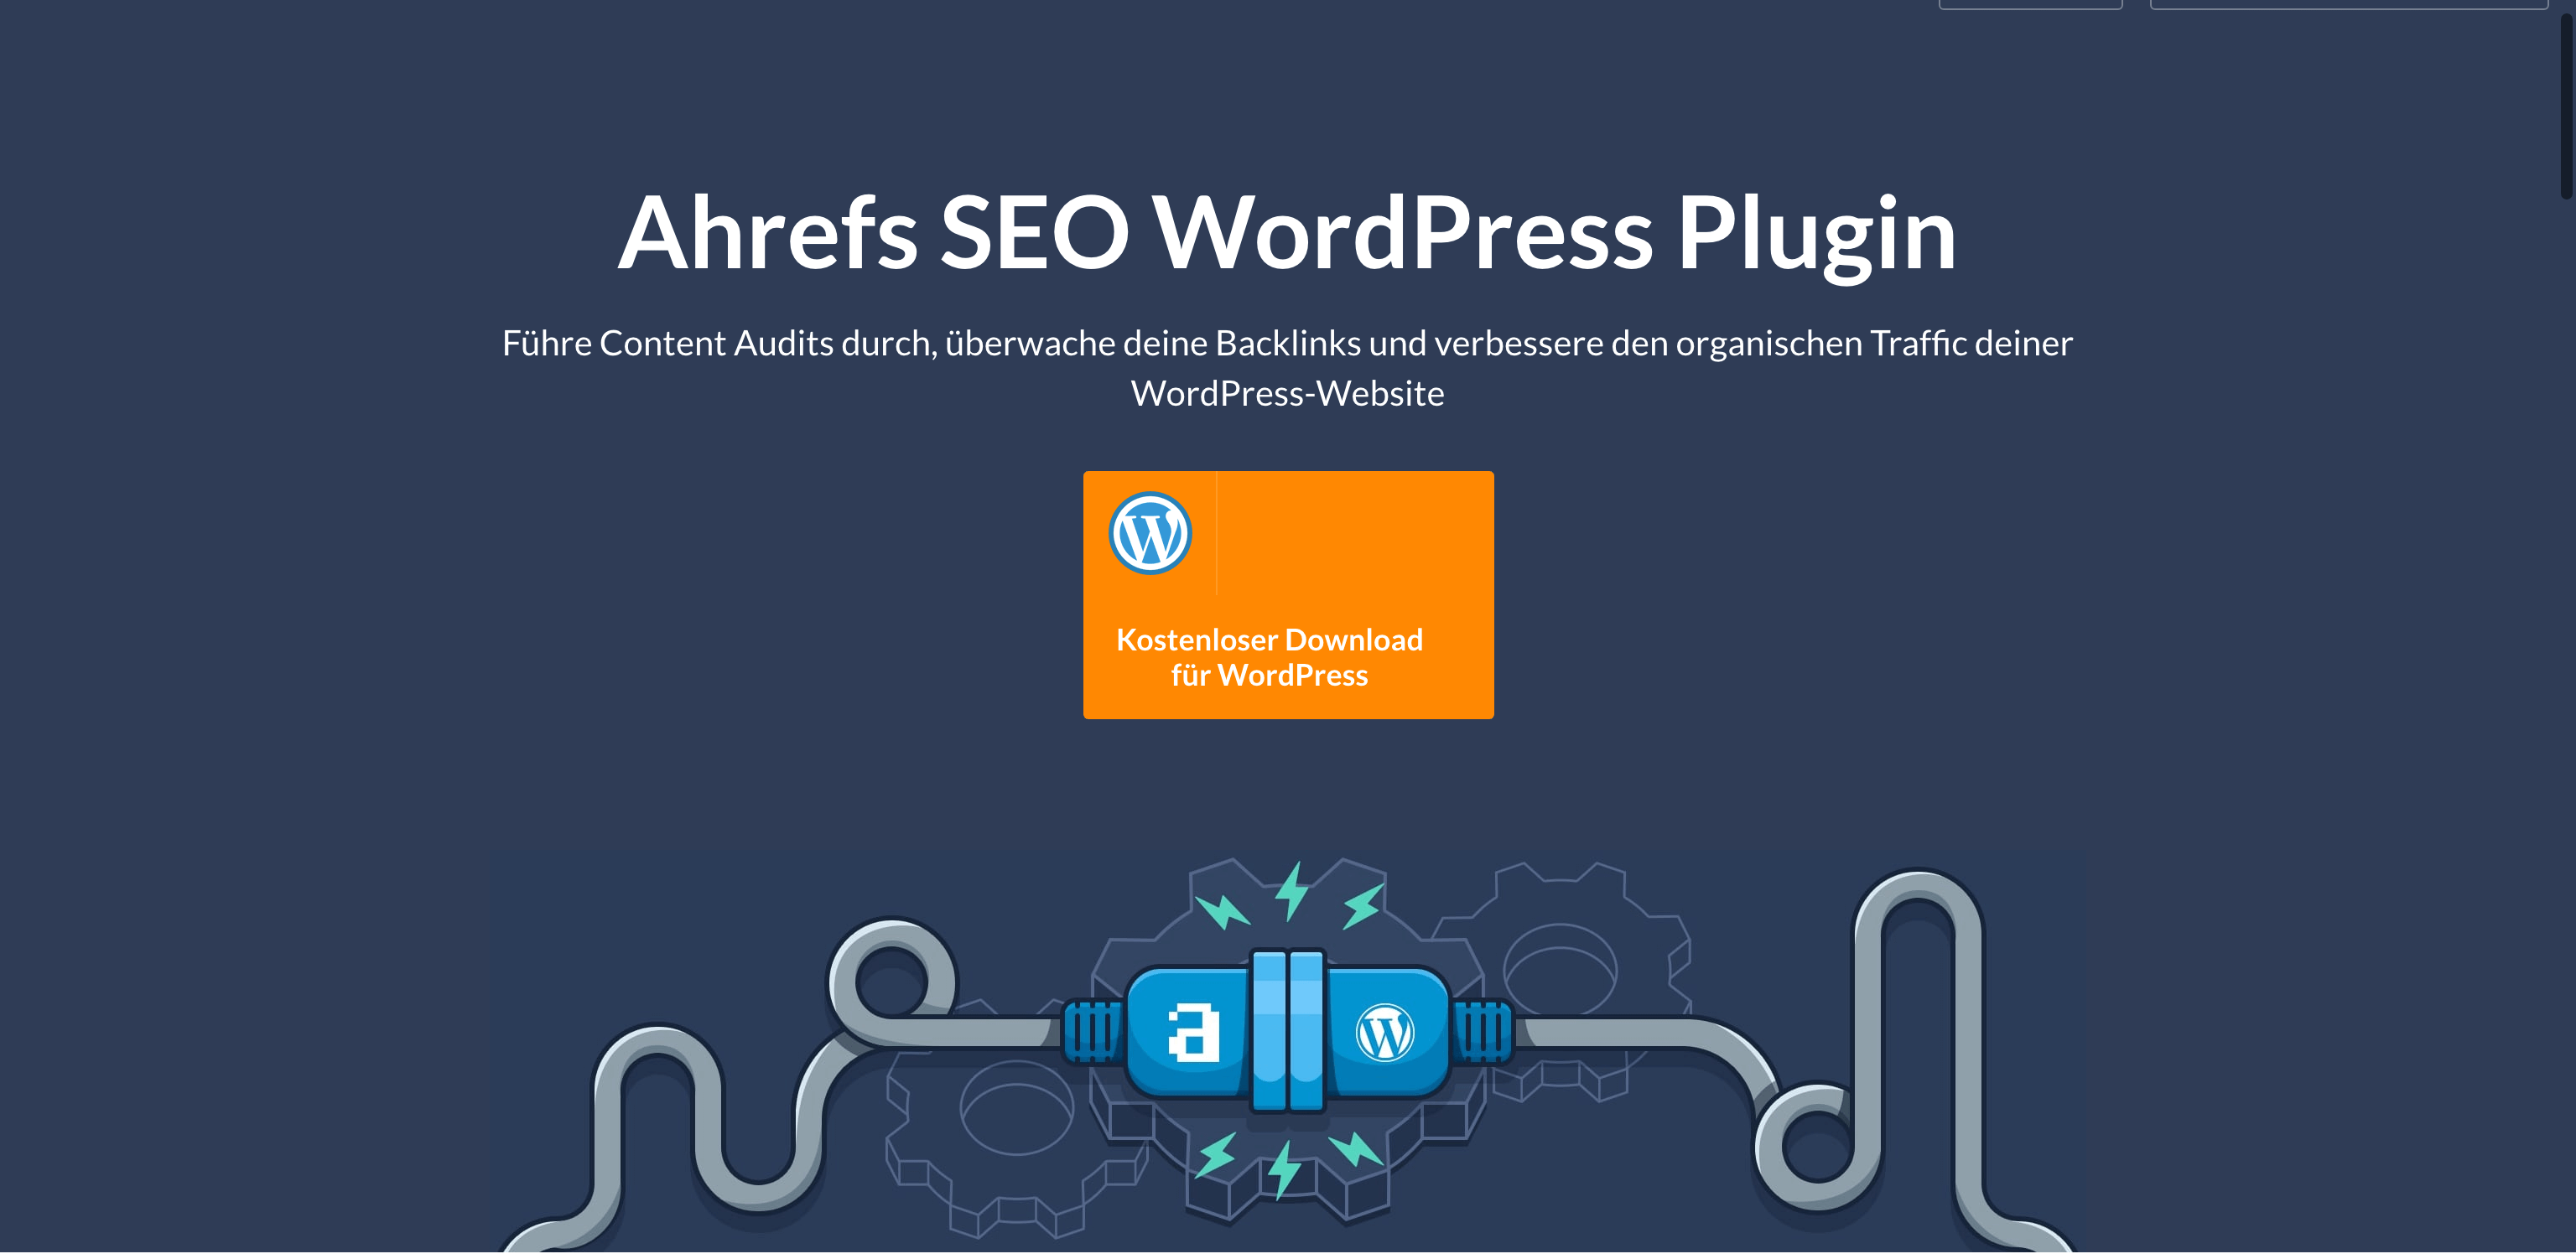 Ahrefs SEO WordPress Plugin